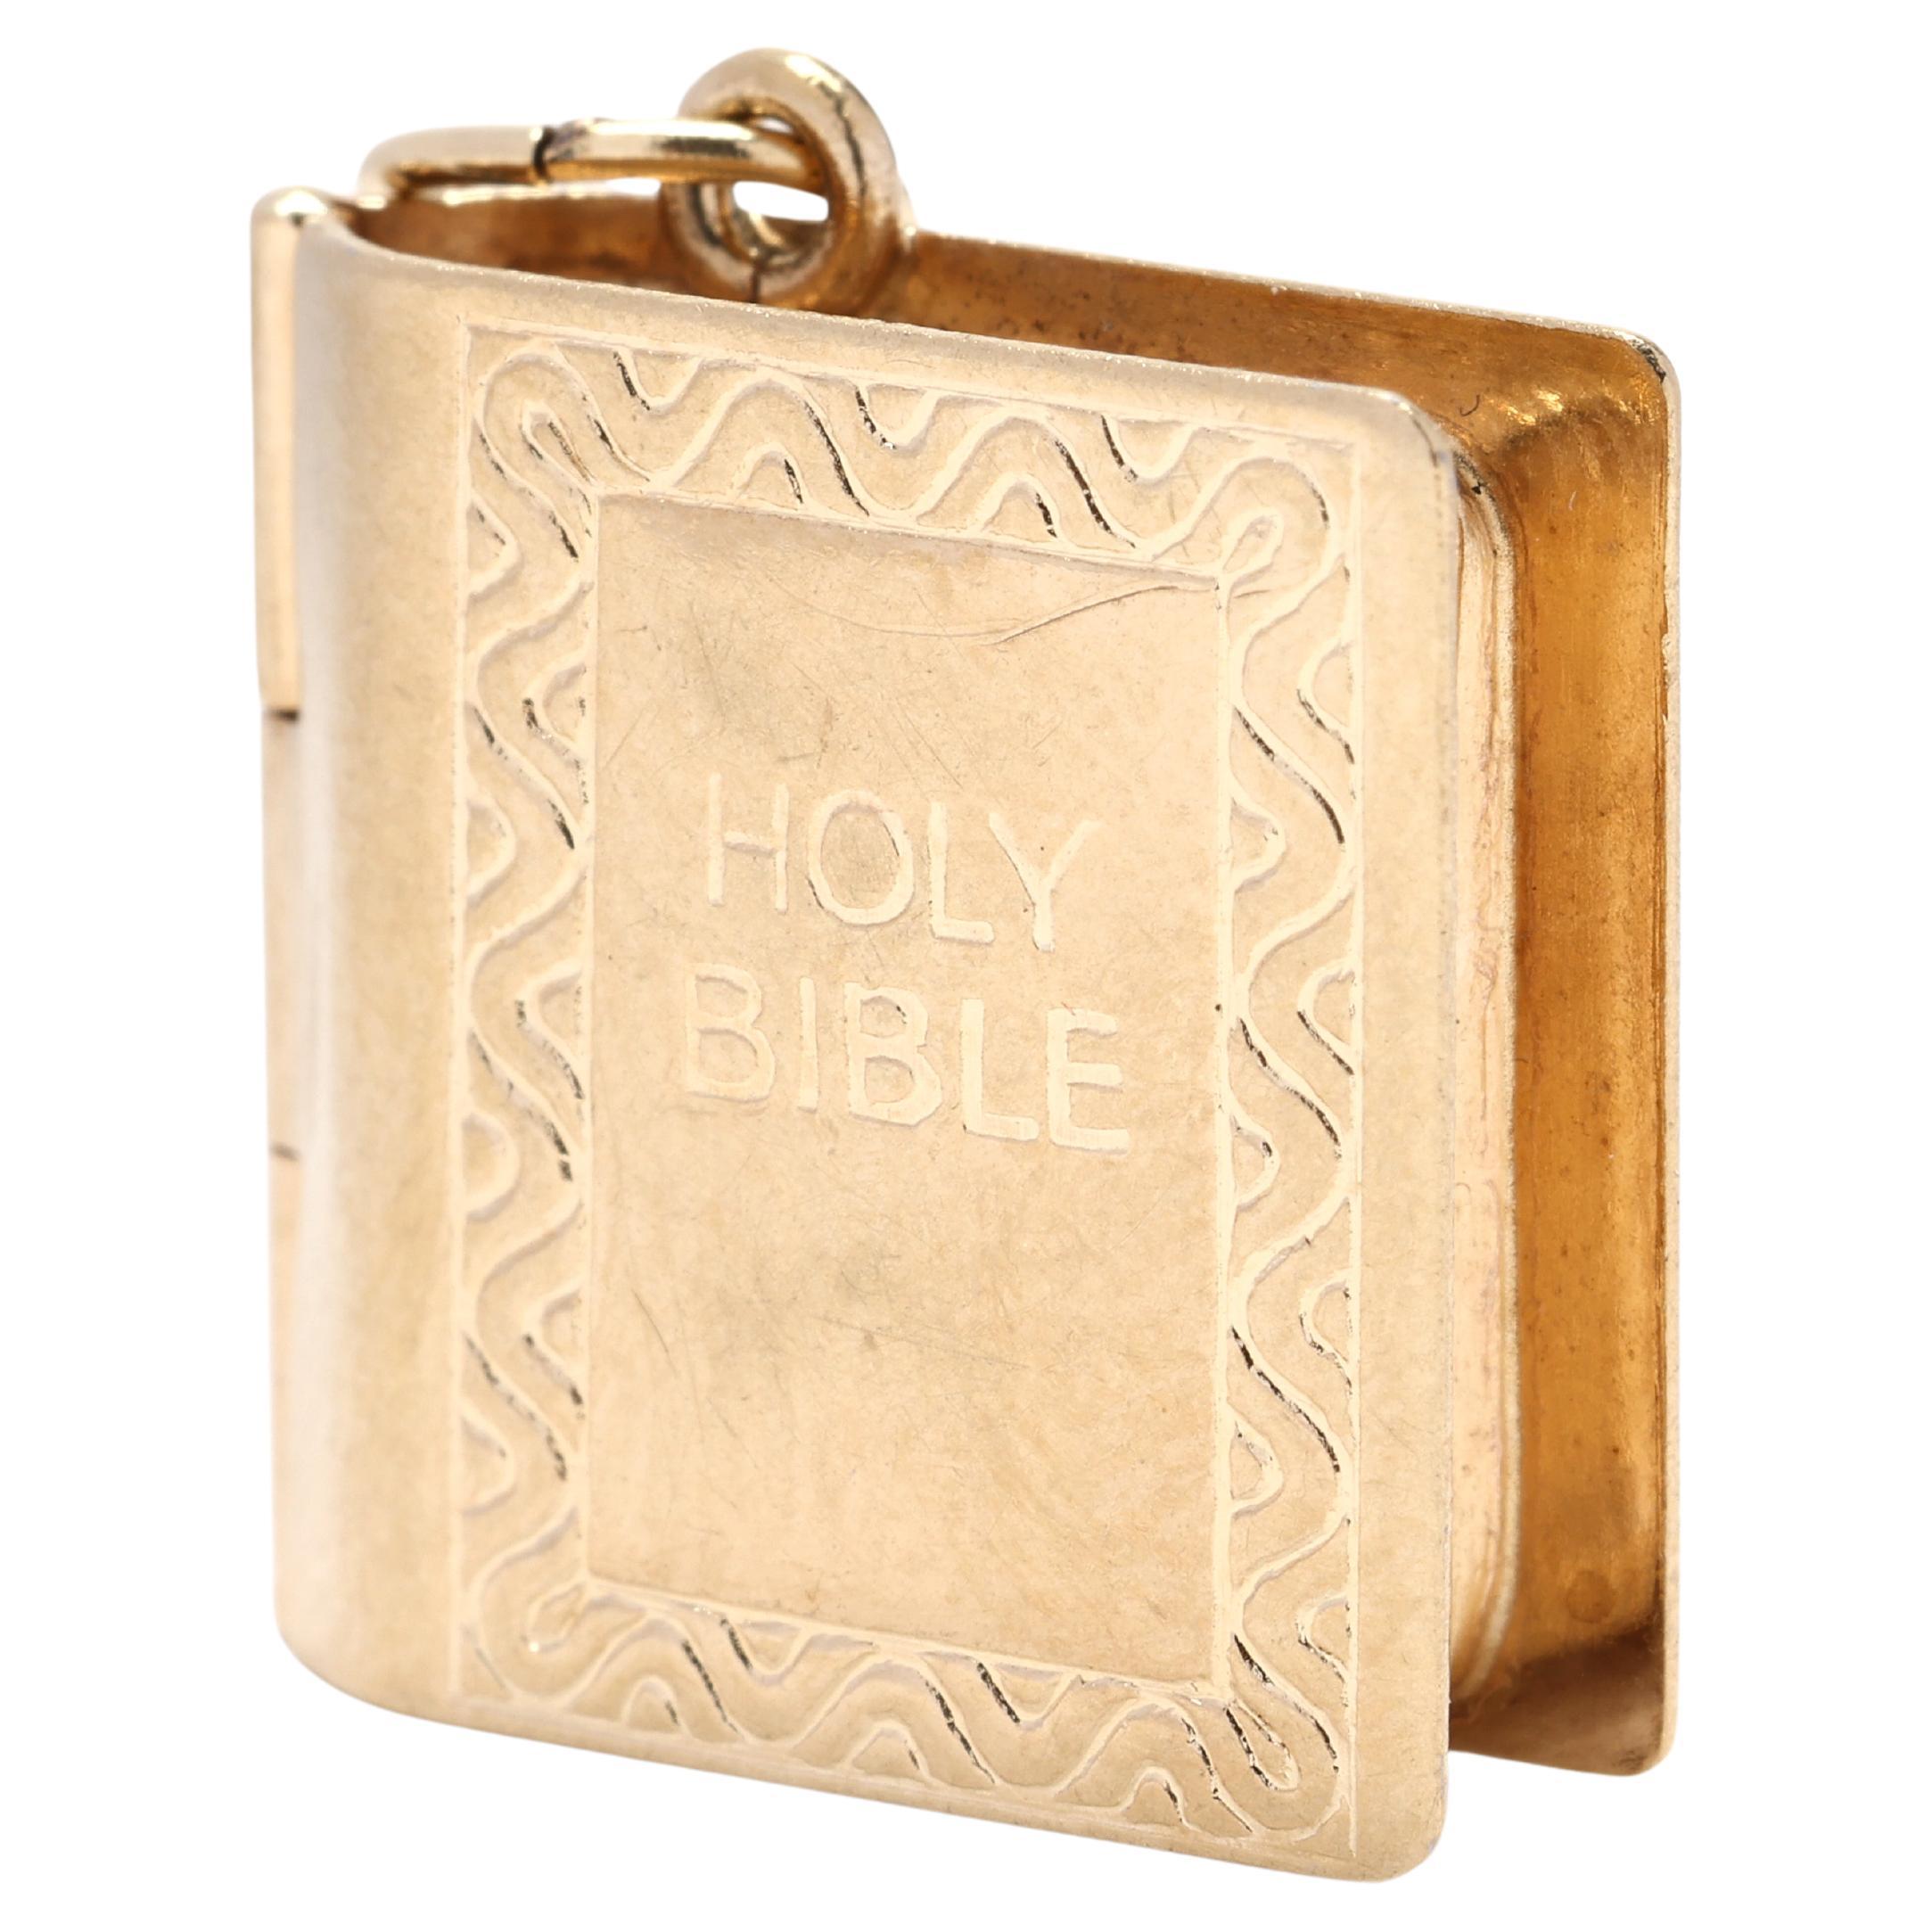 9k Yellow Gold Bible Locket, Old Testament Paper Inside, Engraved Charm Locket